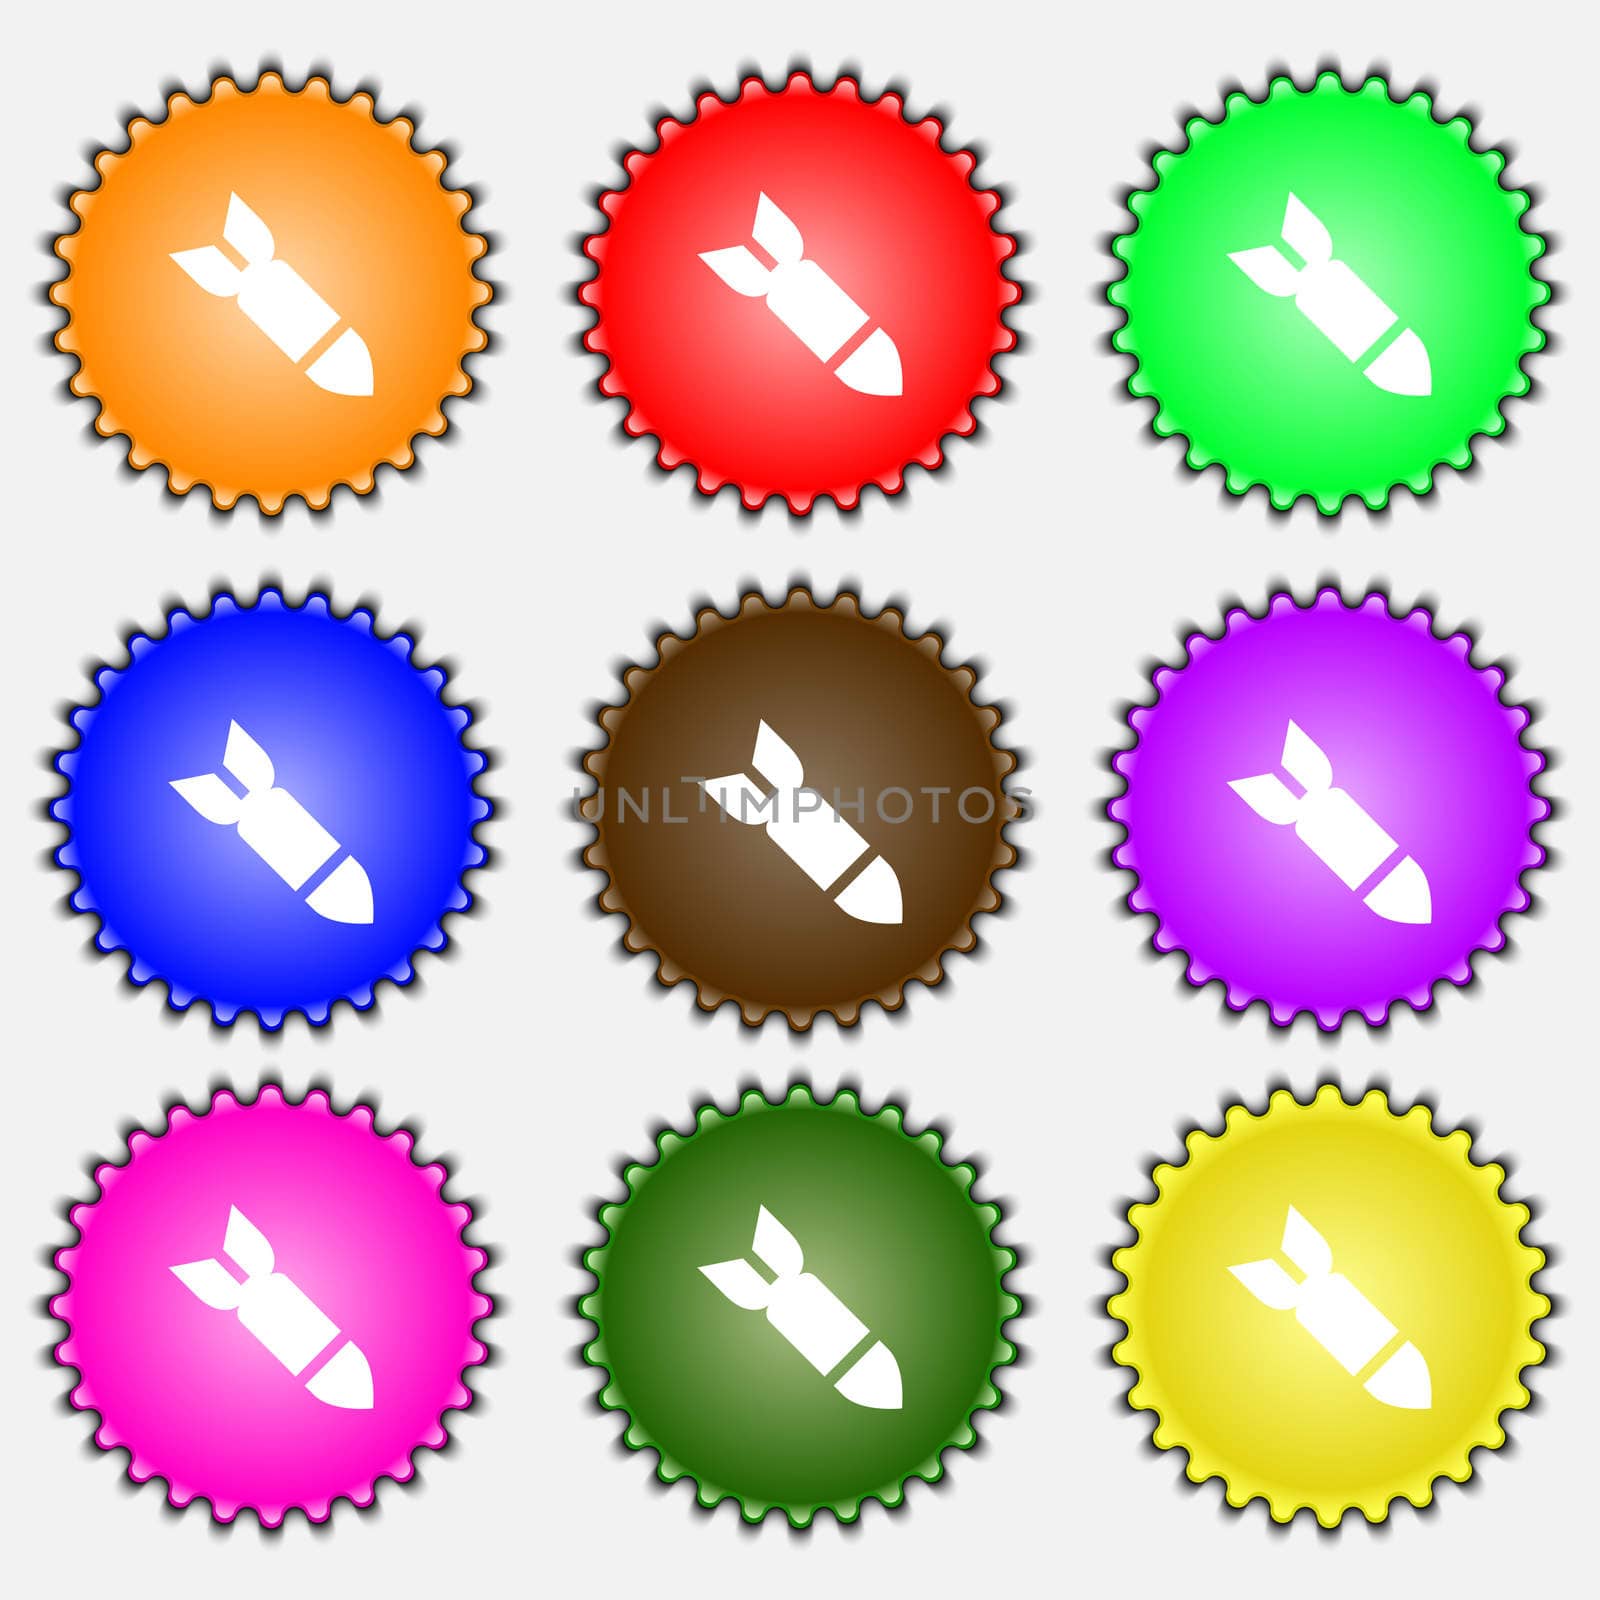 Missile,Rocket weapon icon sign. A set of nine different colored labels. illustration 